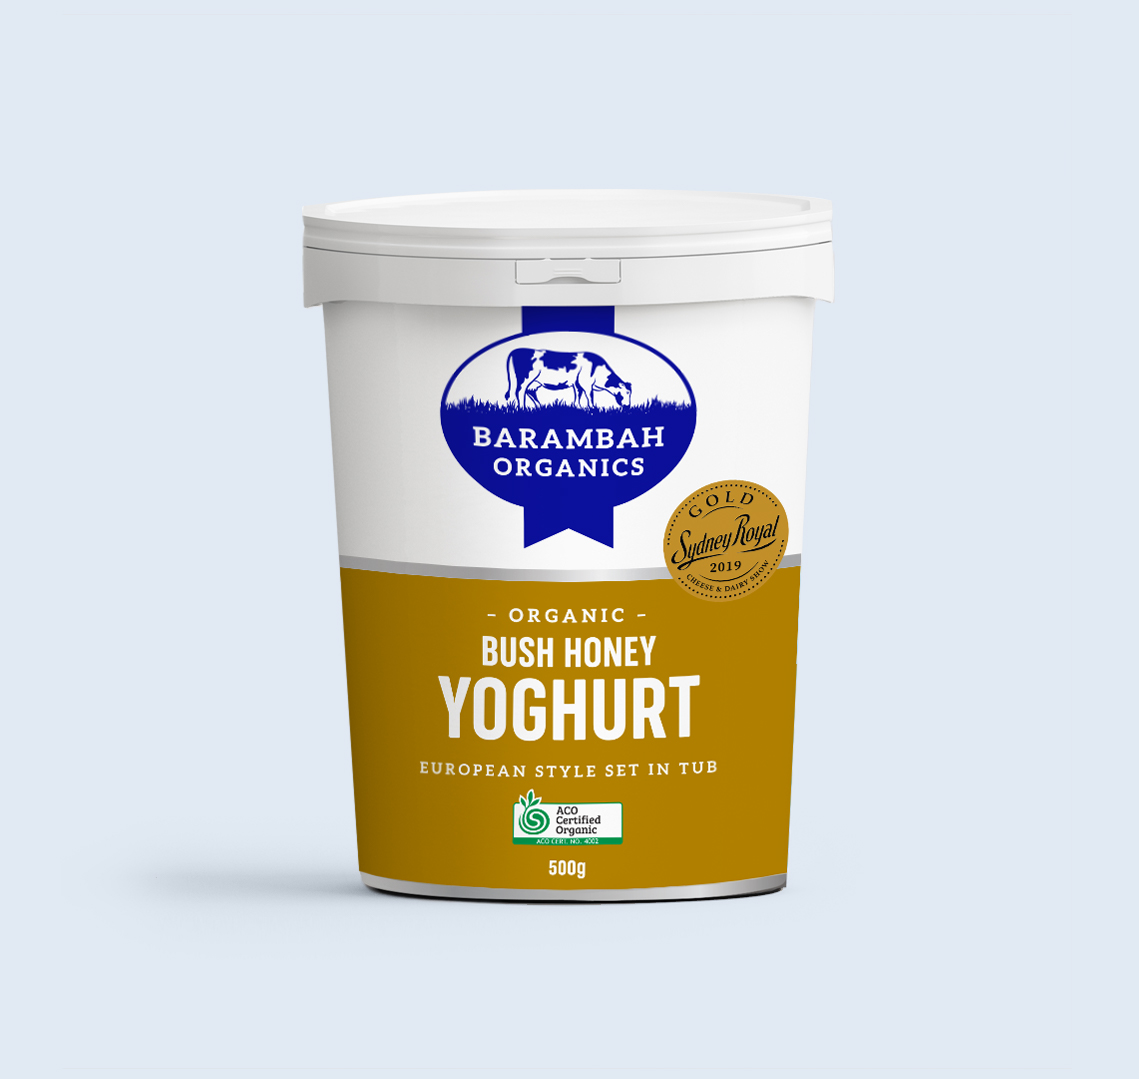 500g of Bush Honey Yoghurt - Healthy Yoghurt Australia - Barambah Organics